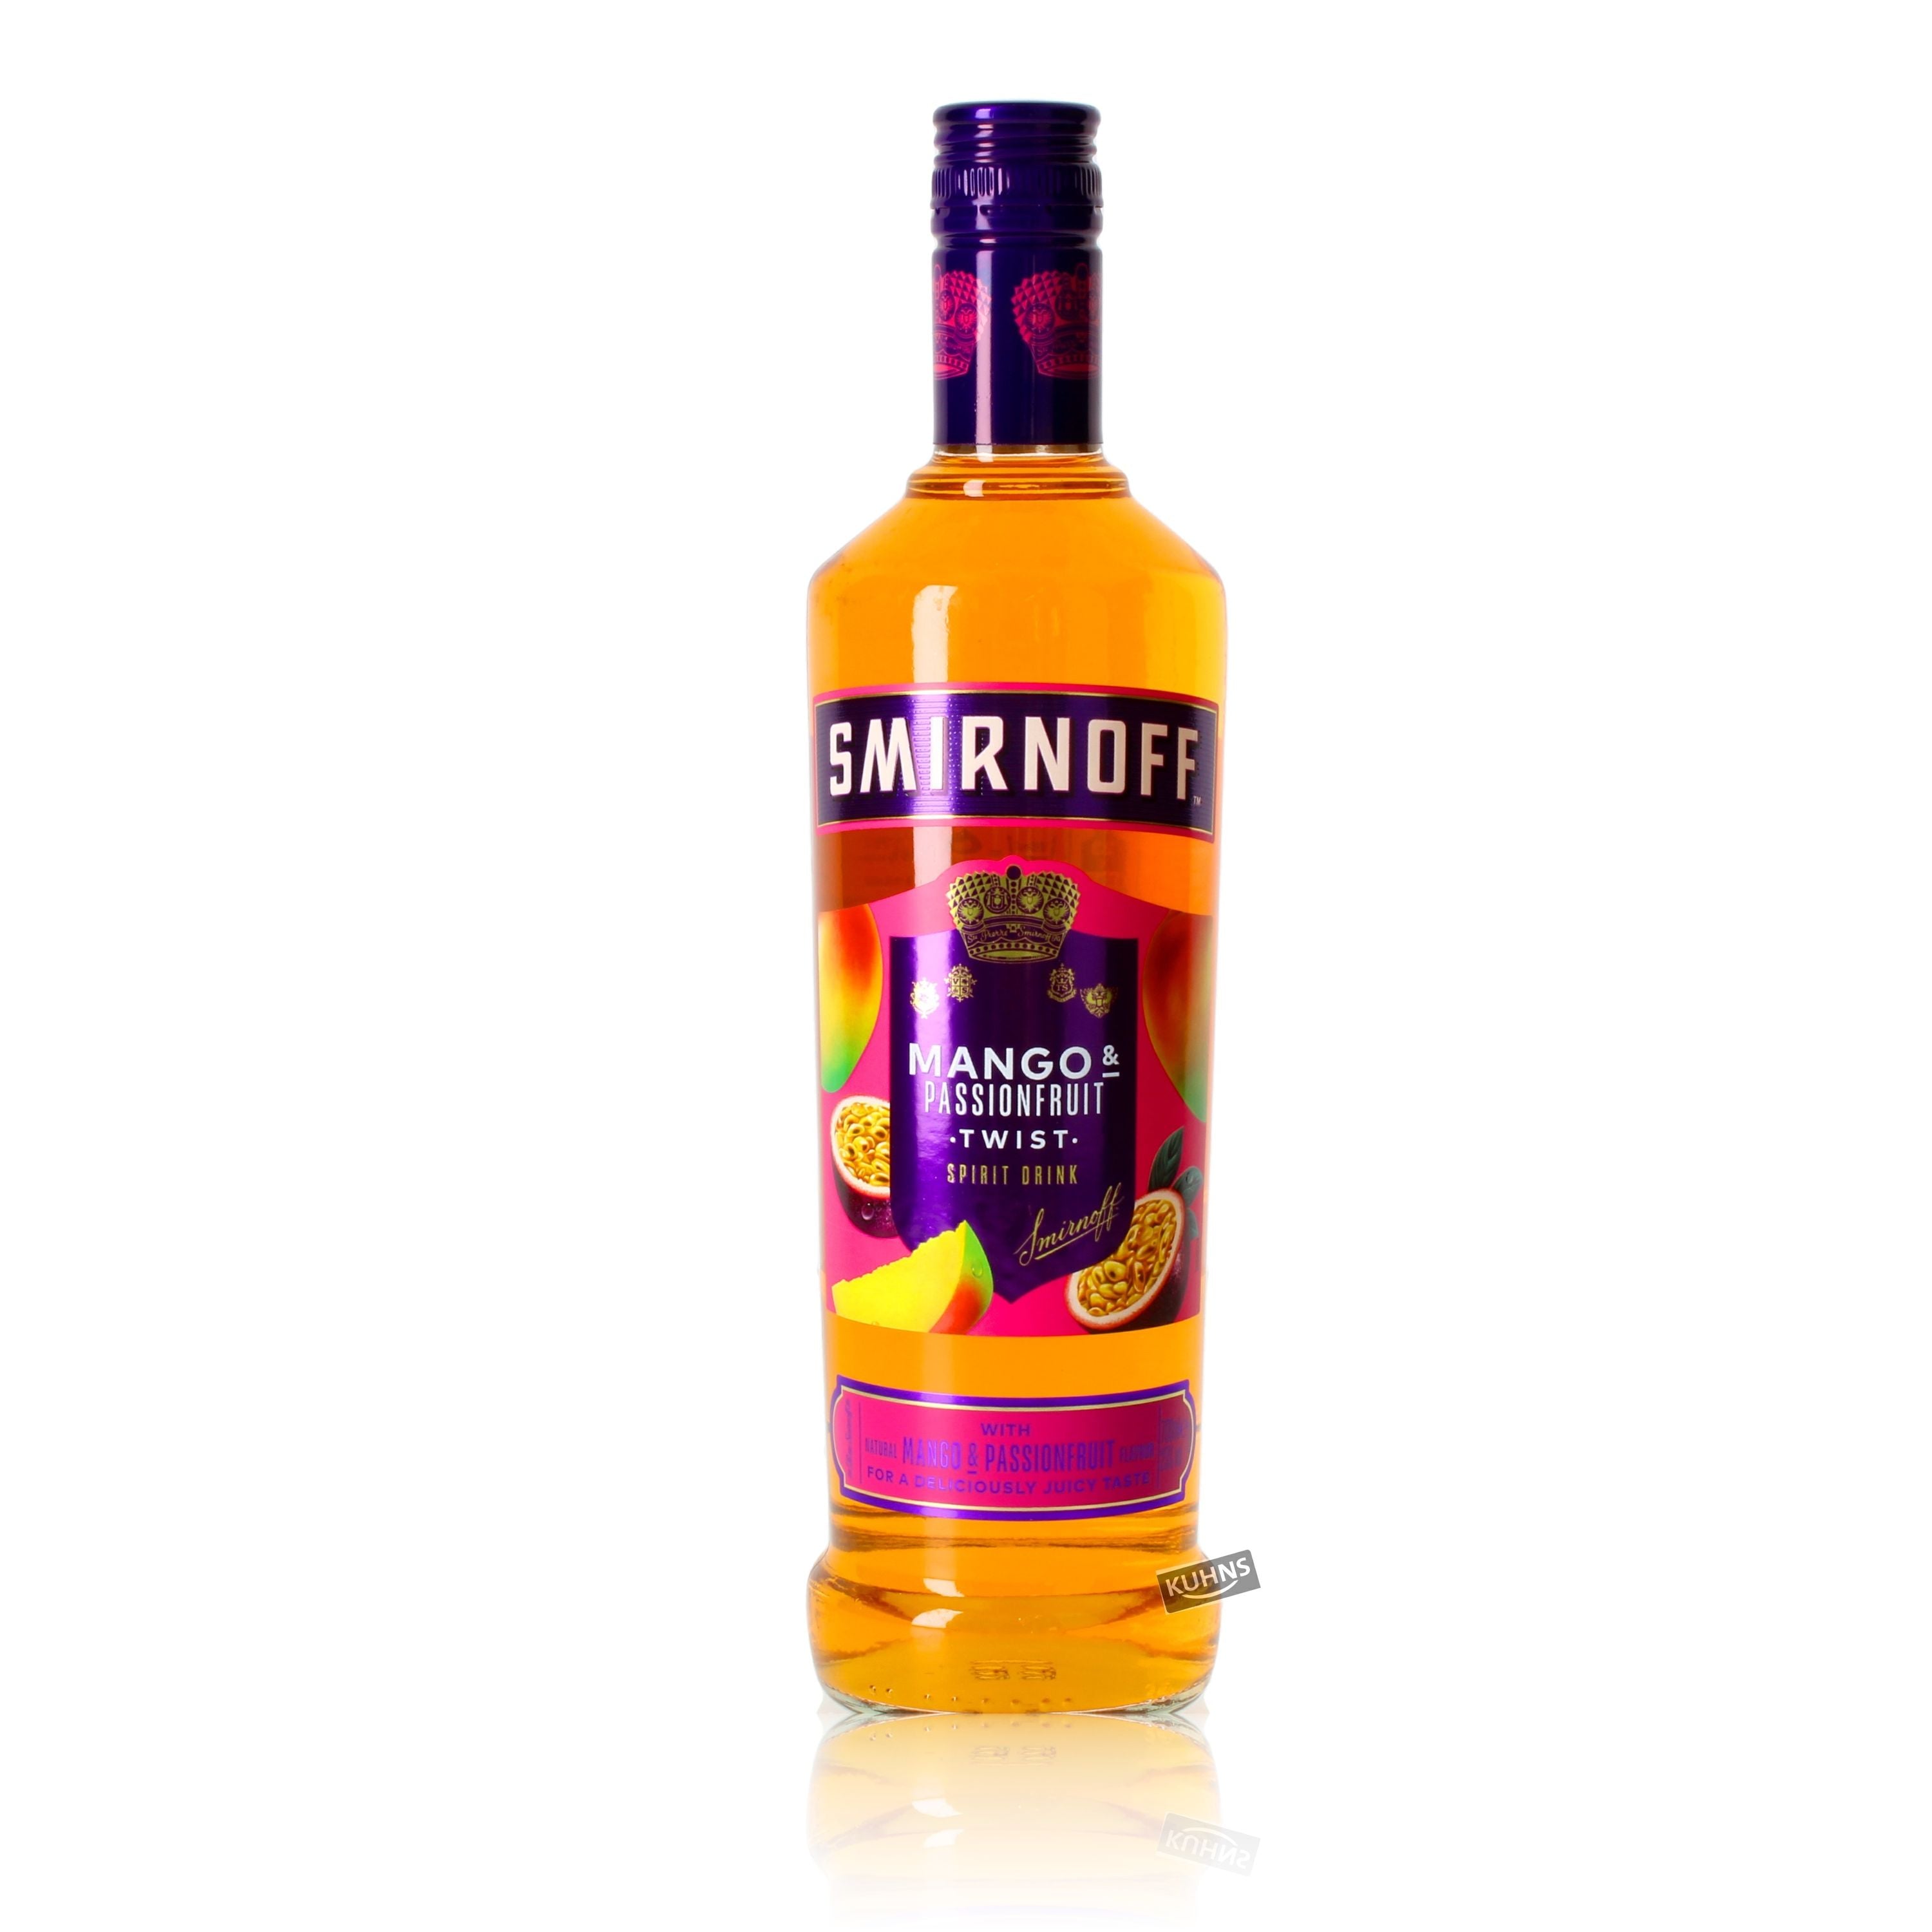 Smirnoff Mango & Passionfruit Twist 0,7l, alc. 25 Vol.-%, Wodka-Likör USA